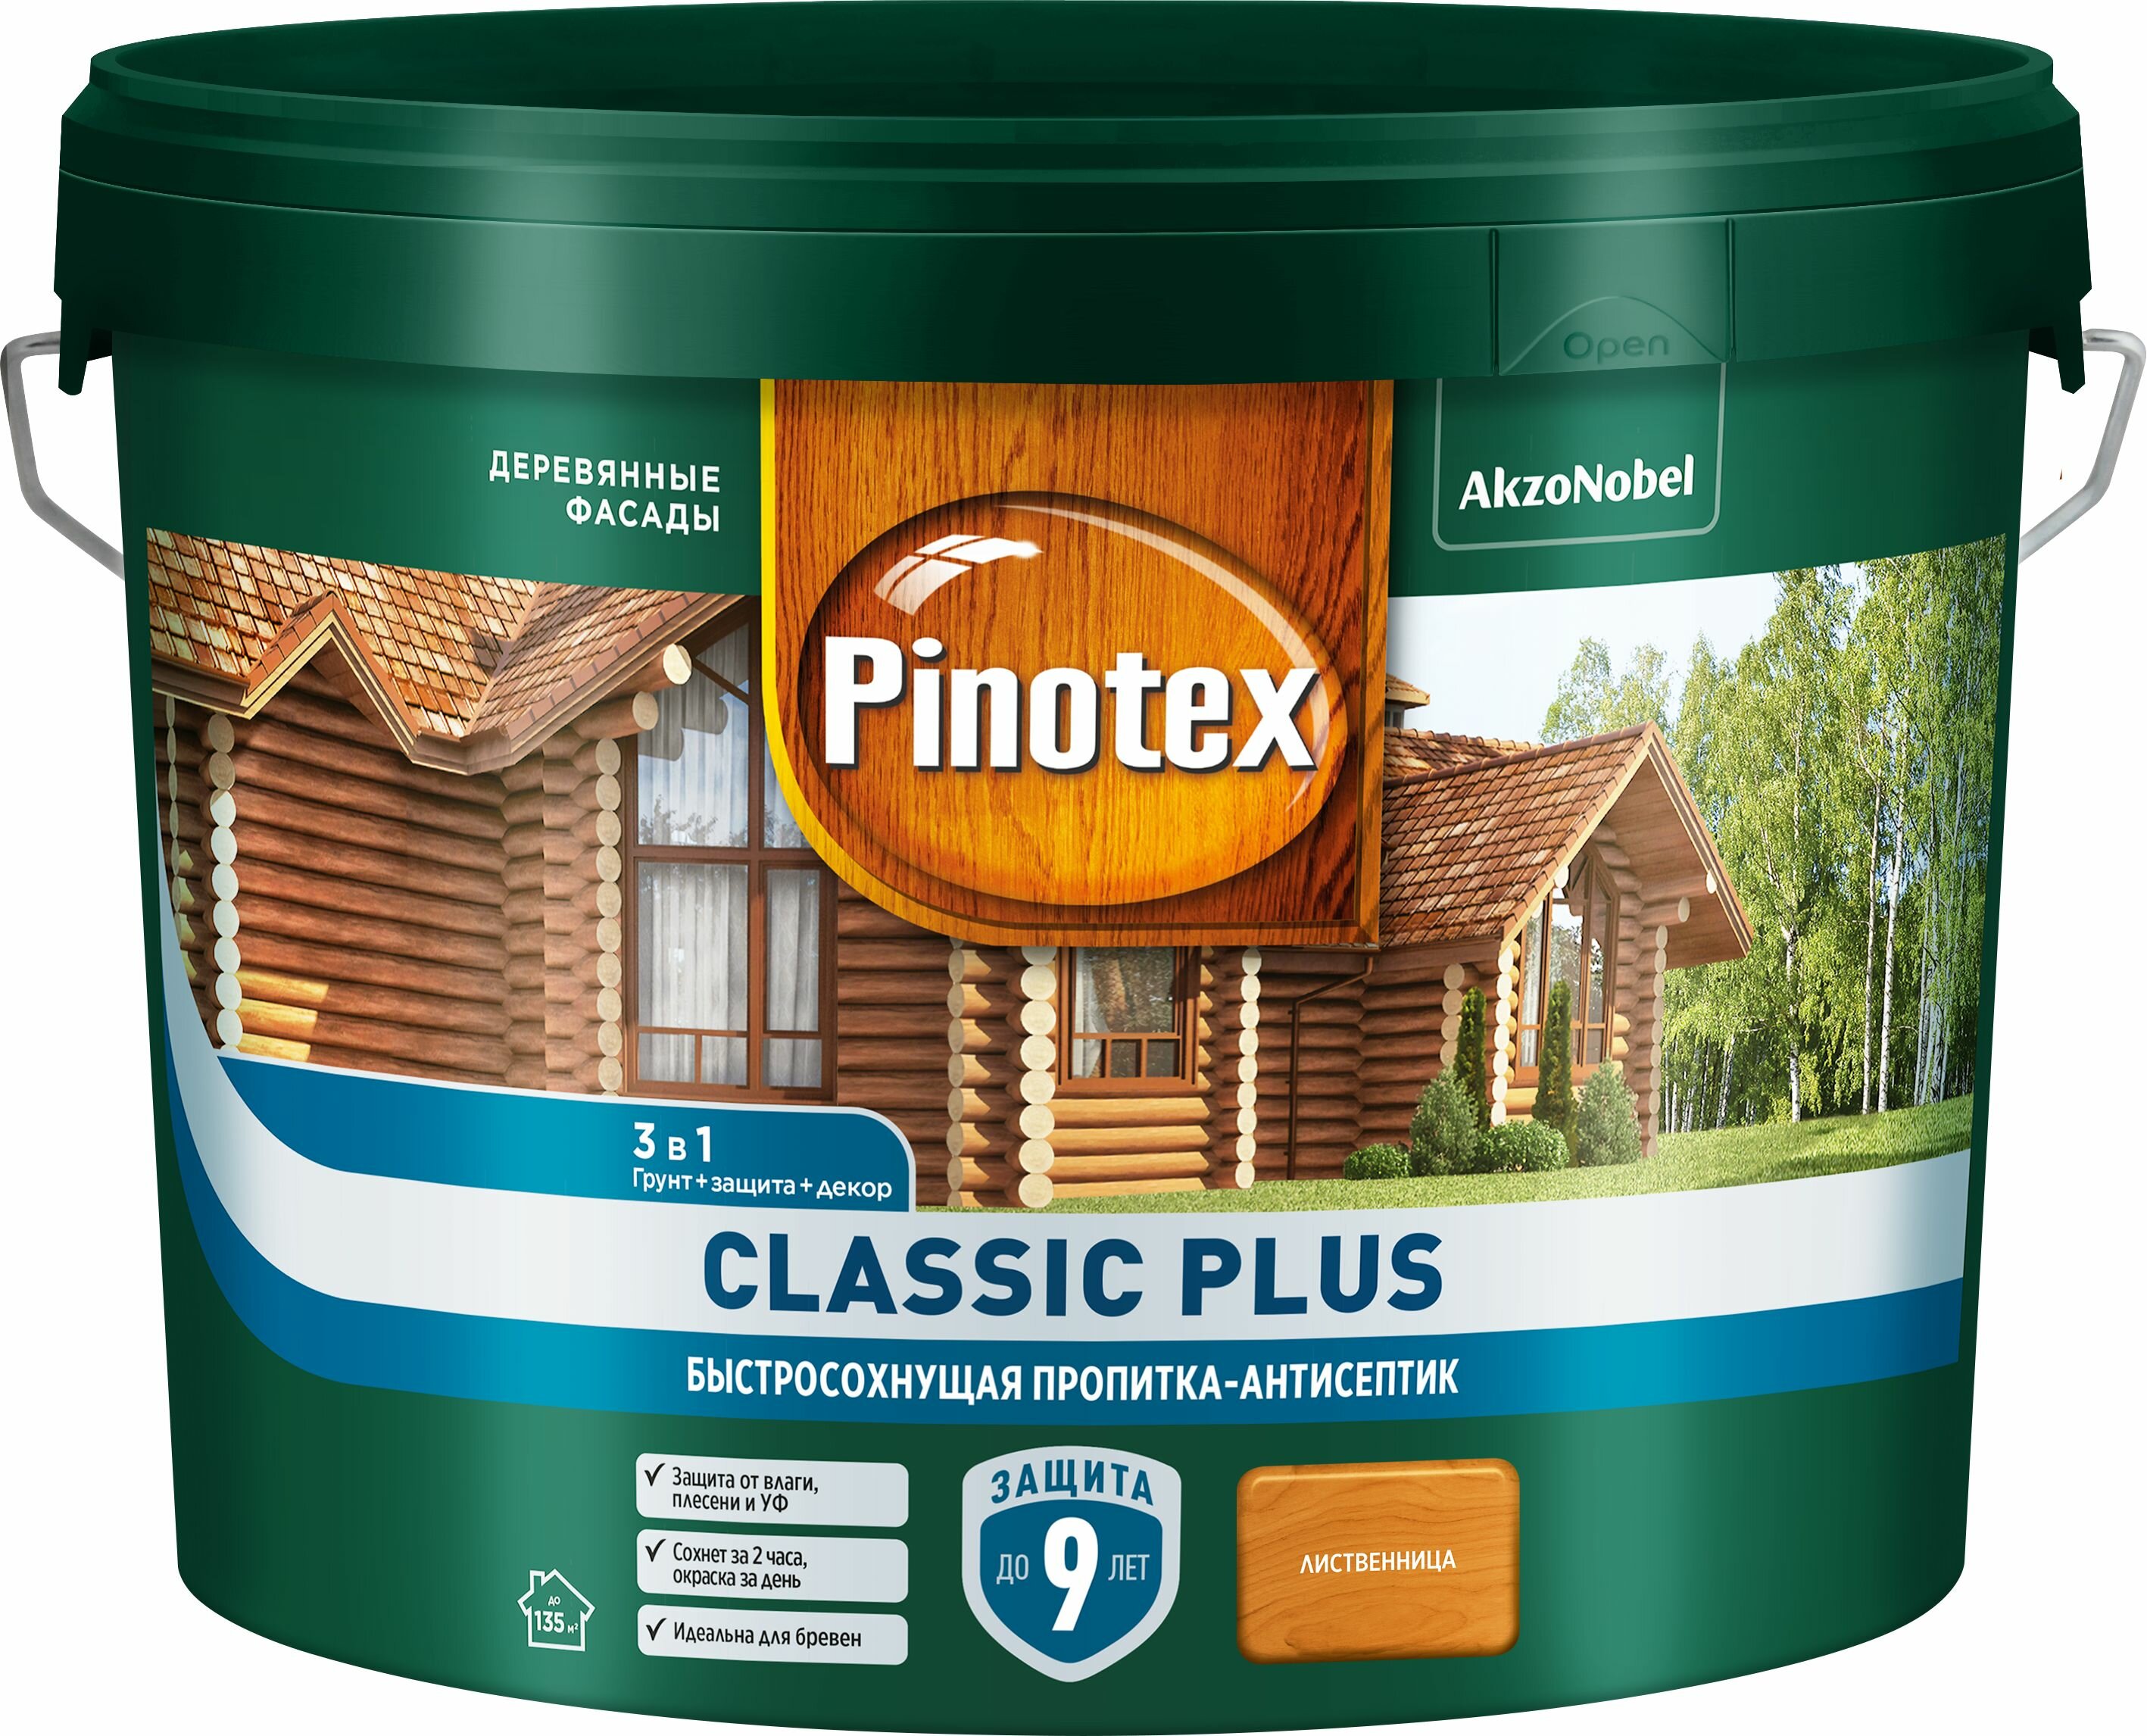 Pinotex пропитка Classic Plus